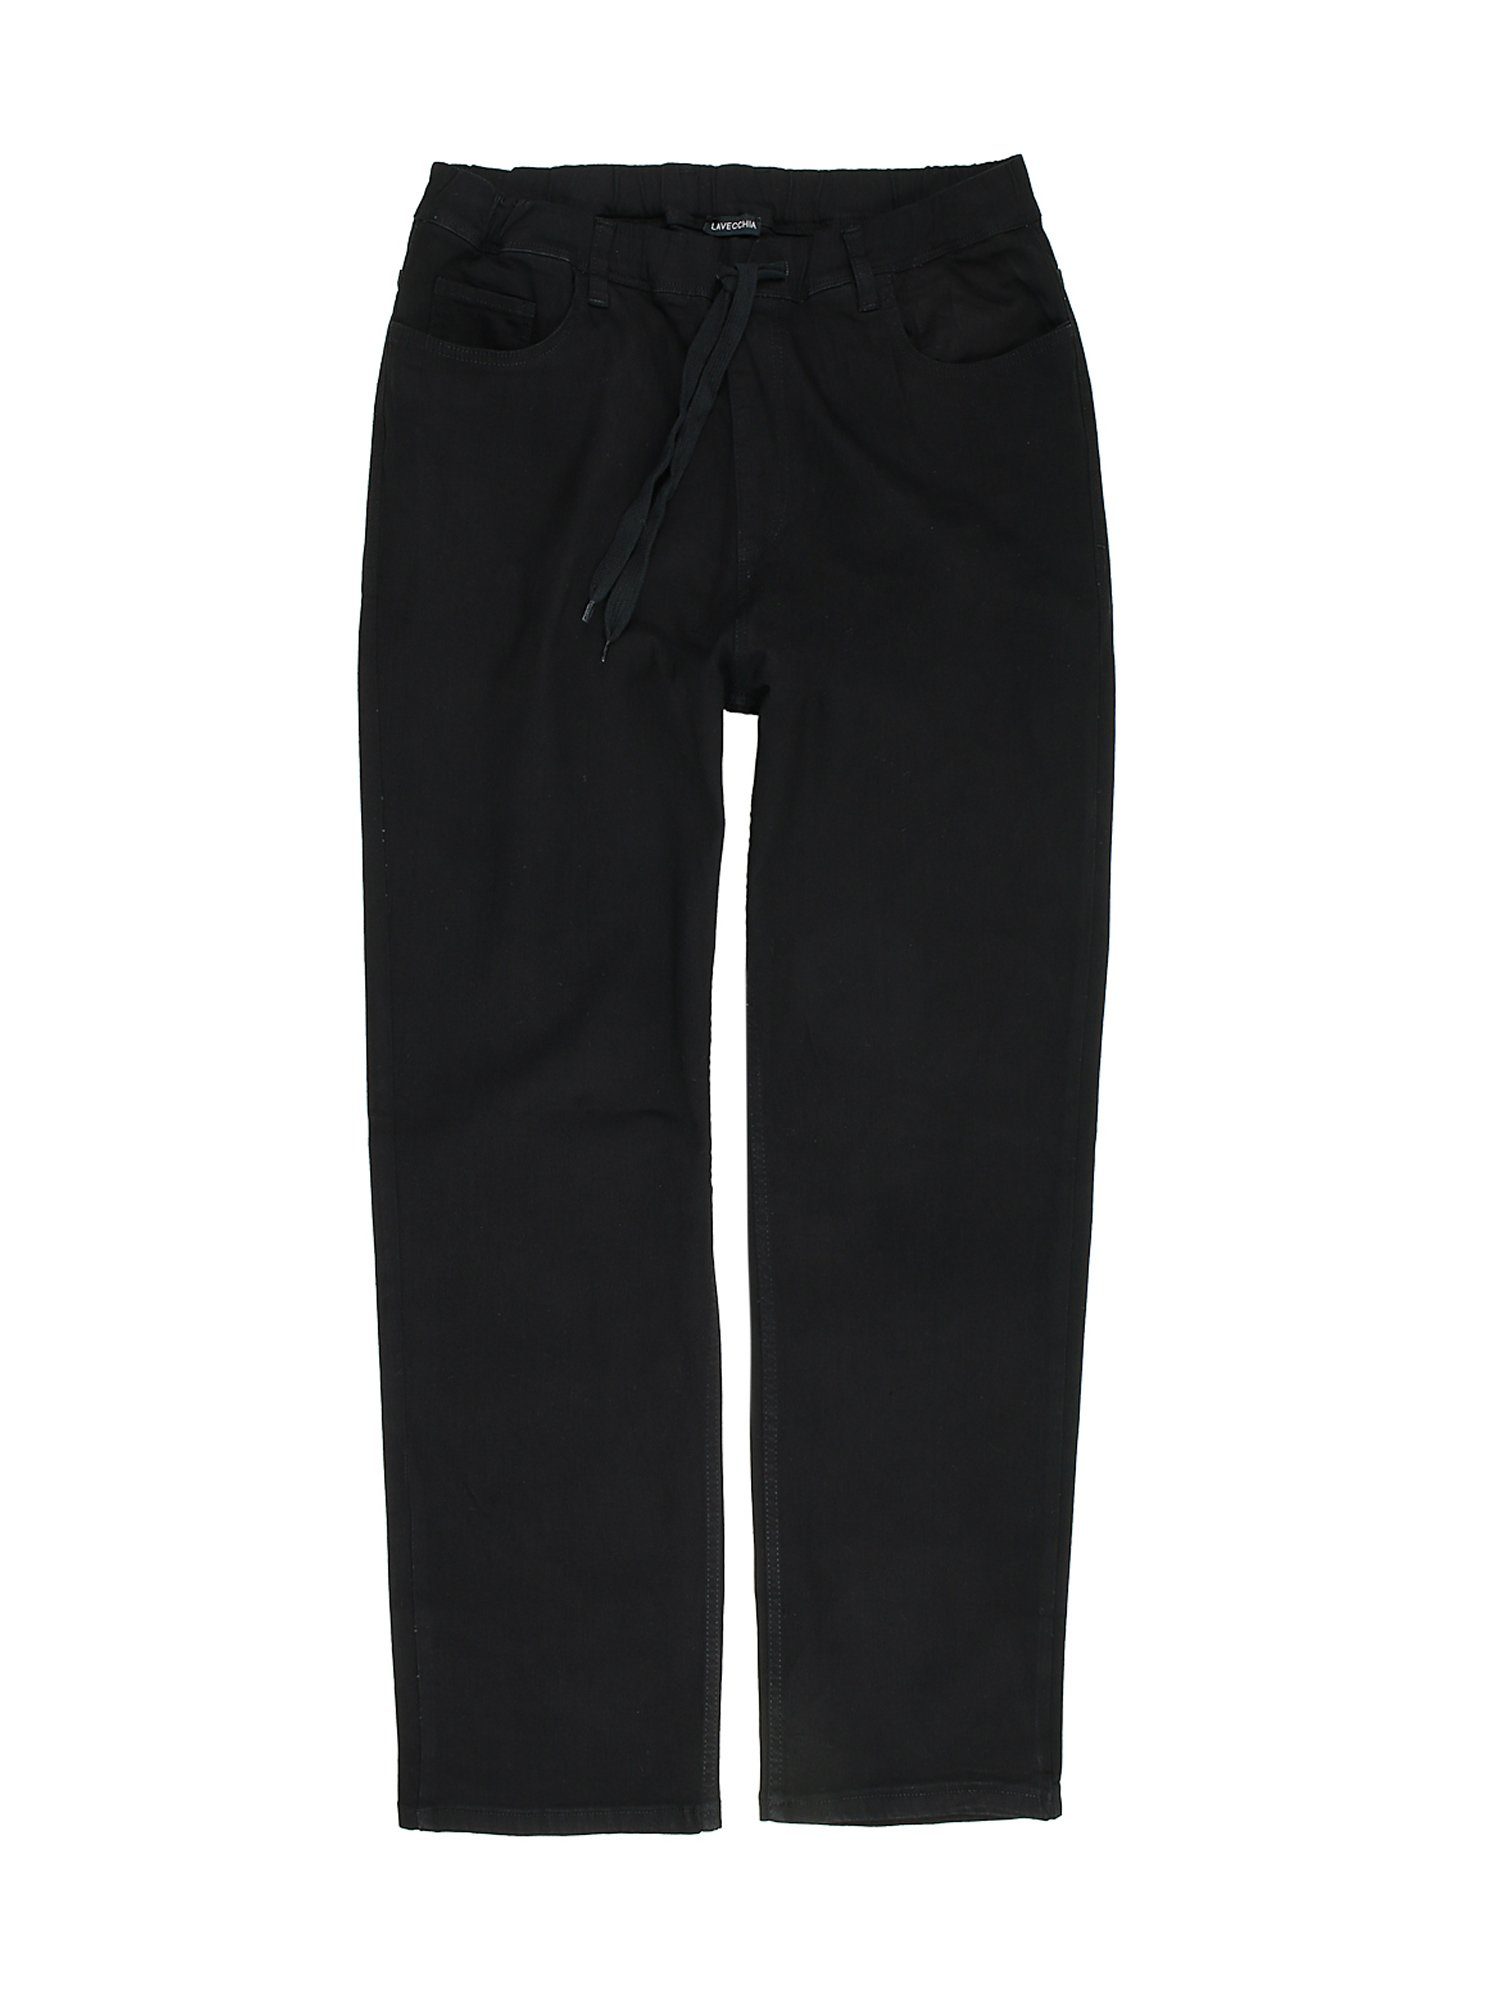 Lavecchia Comfort-fit-Jeans Übergrößen Herren Jeanshose LV-502 Sweat Jeans Hose im Jogger-Stil schwarz